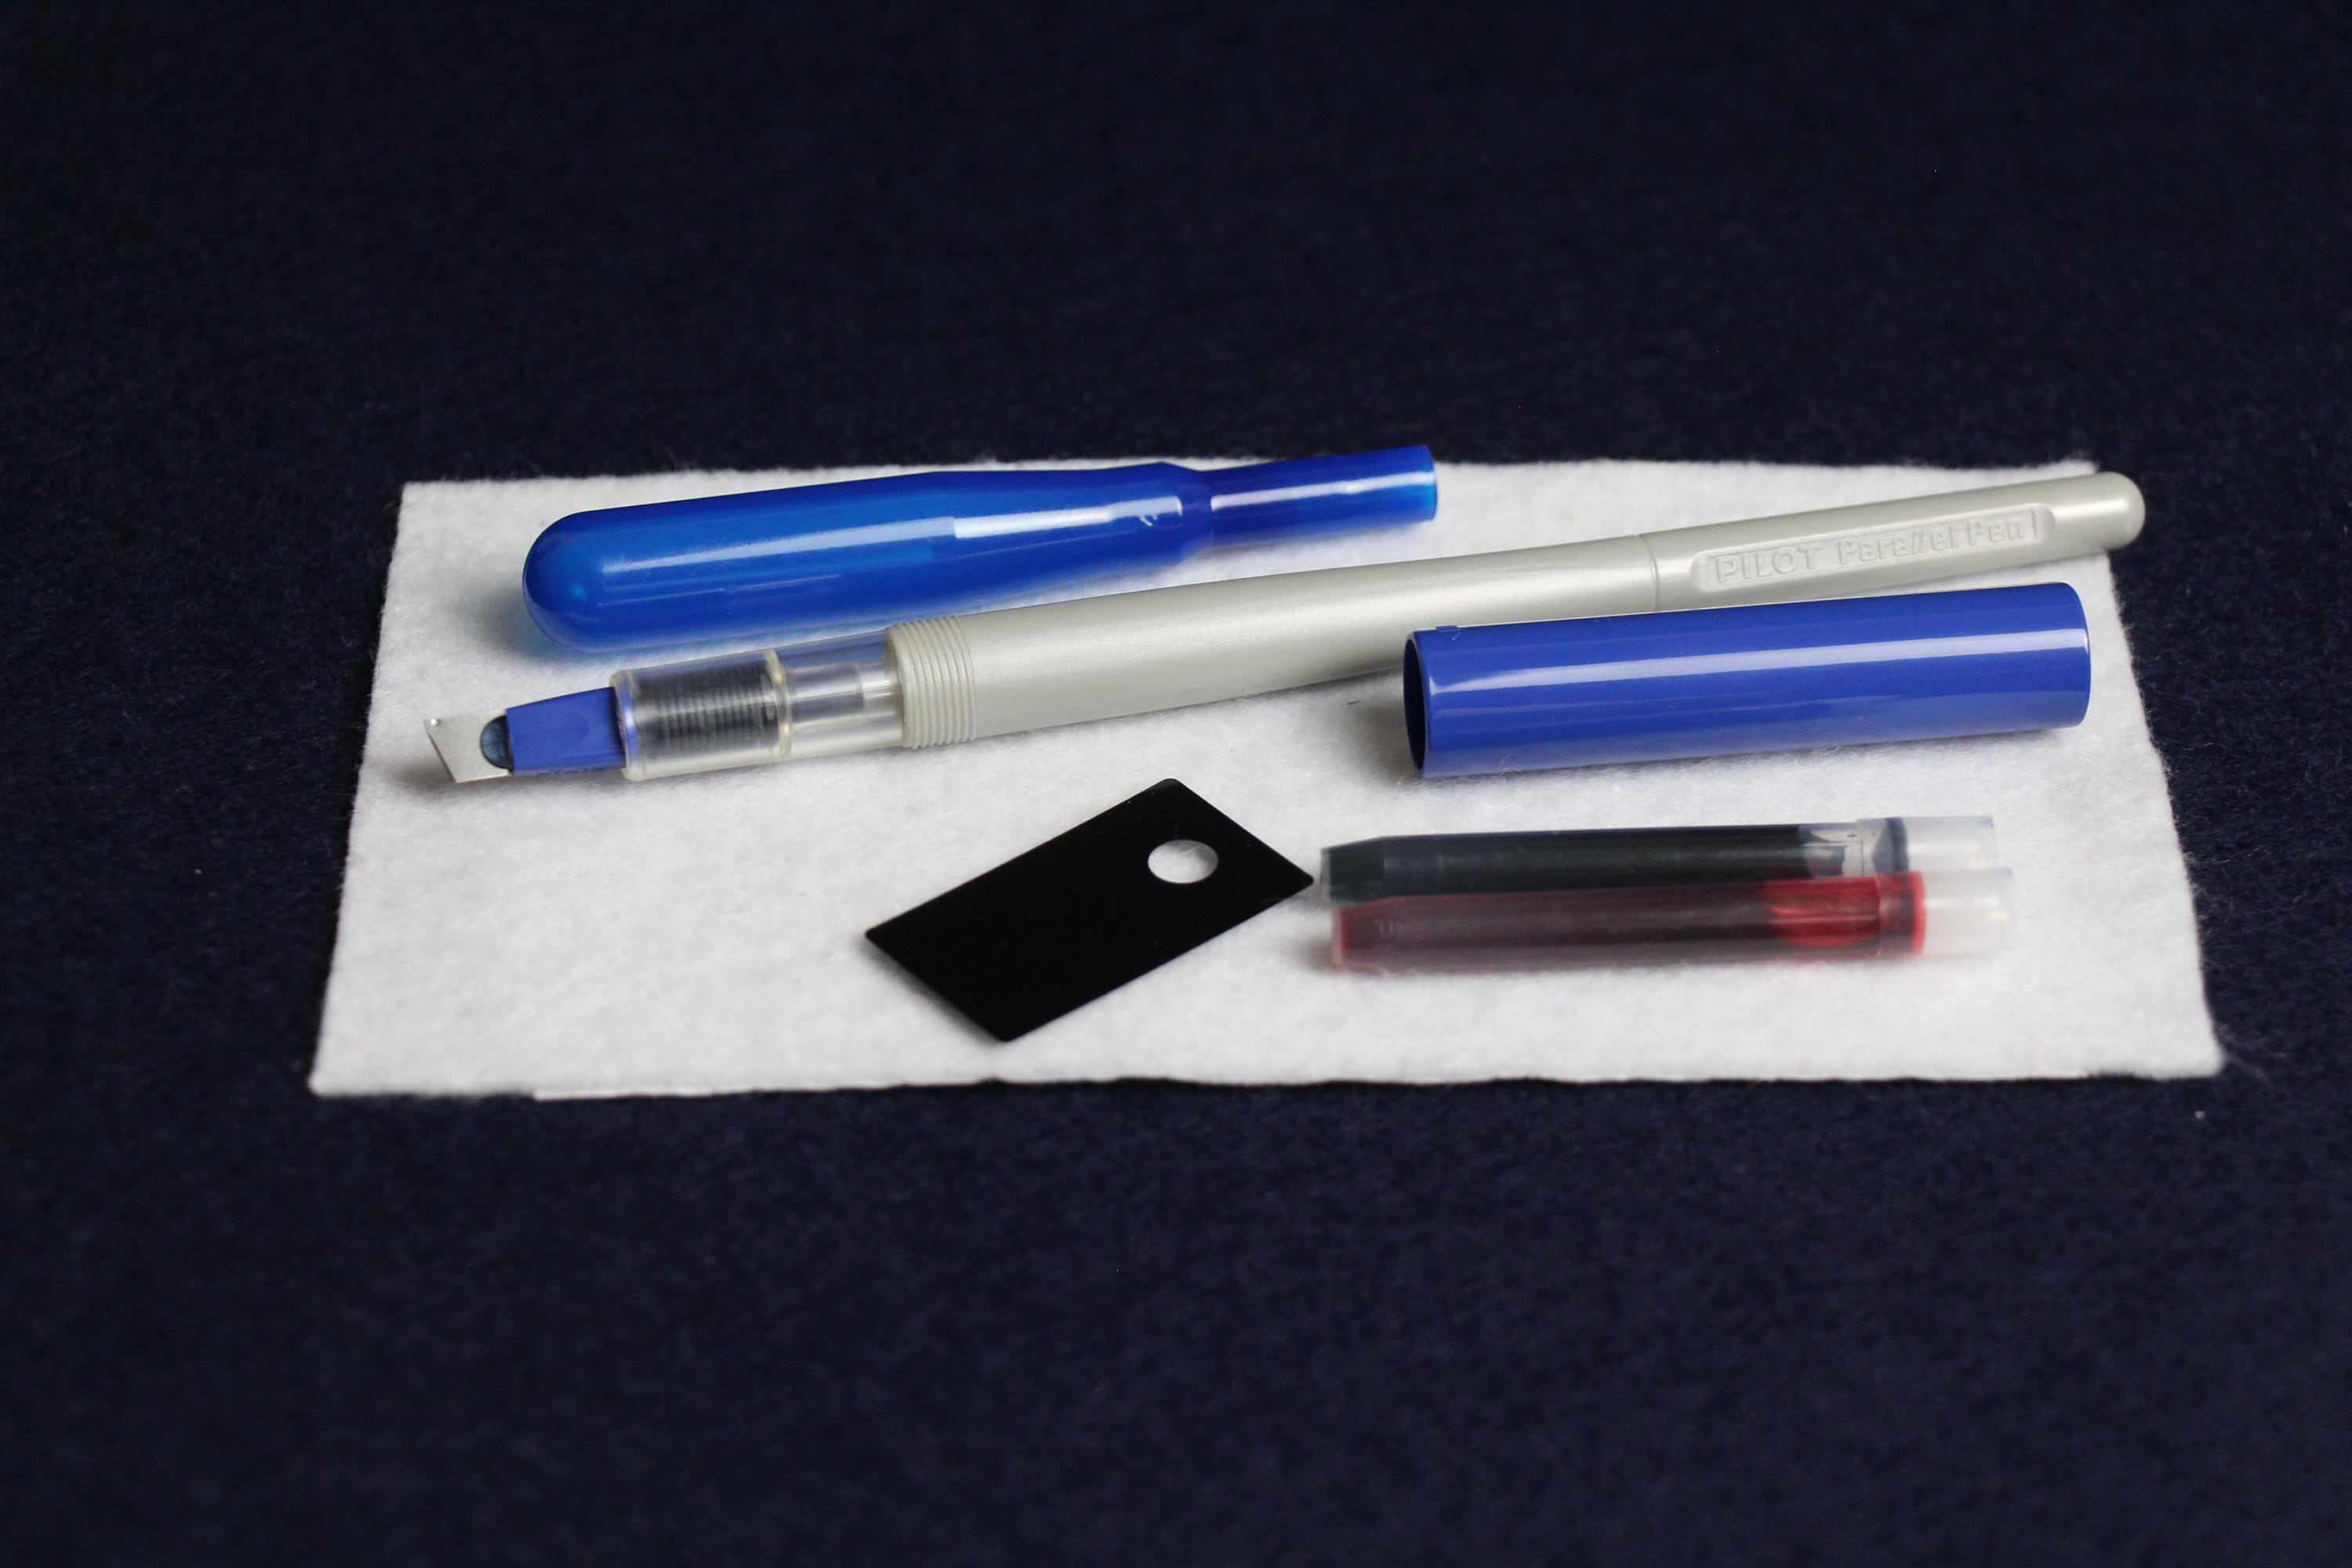 2023 Pen Comparison: Best Pens — Sharpie, BIC, iBayam, Pilot, by Catalina